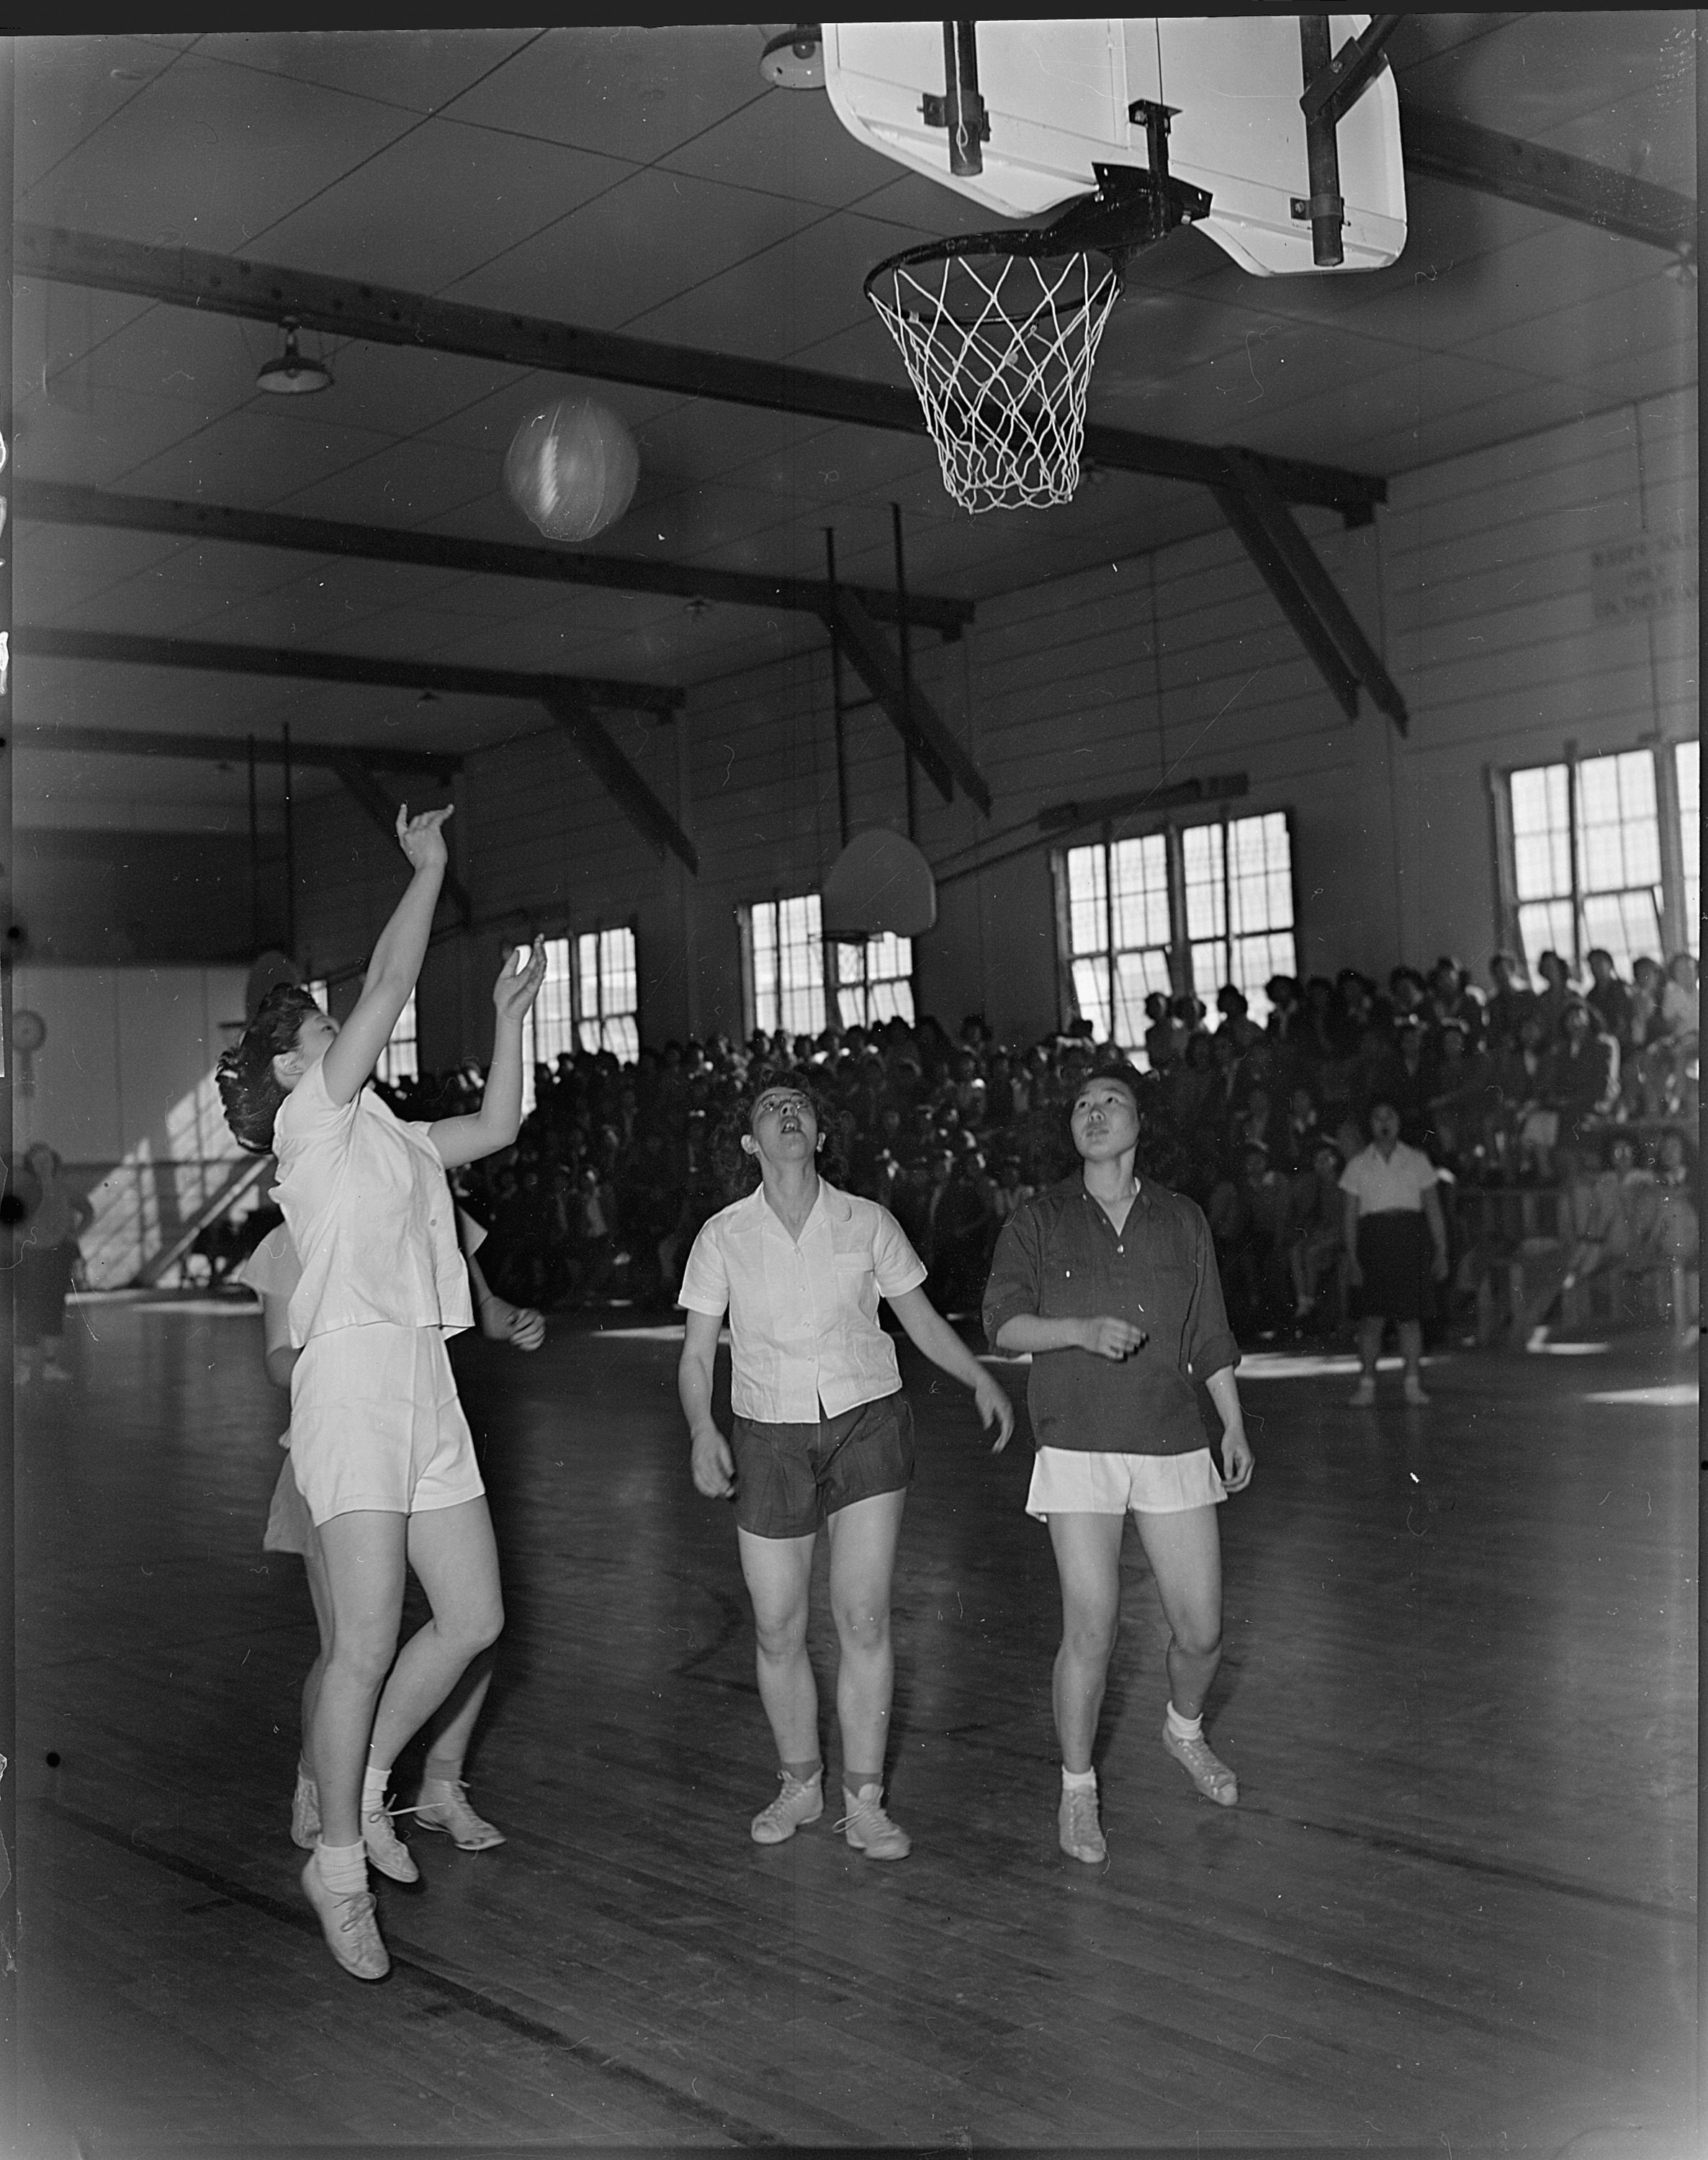 Girls playing basketball indoors.